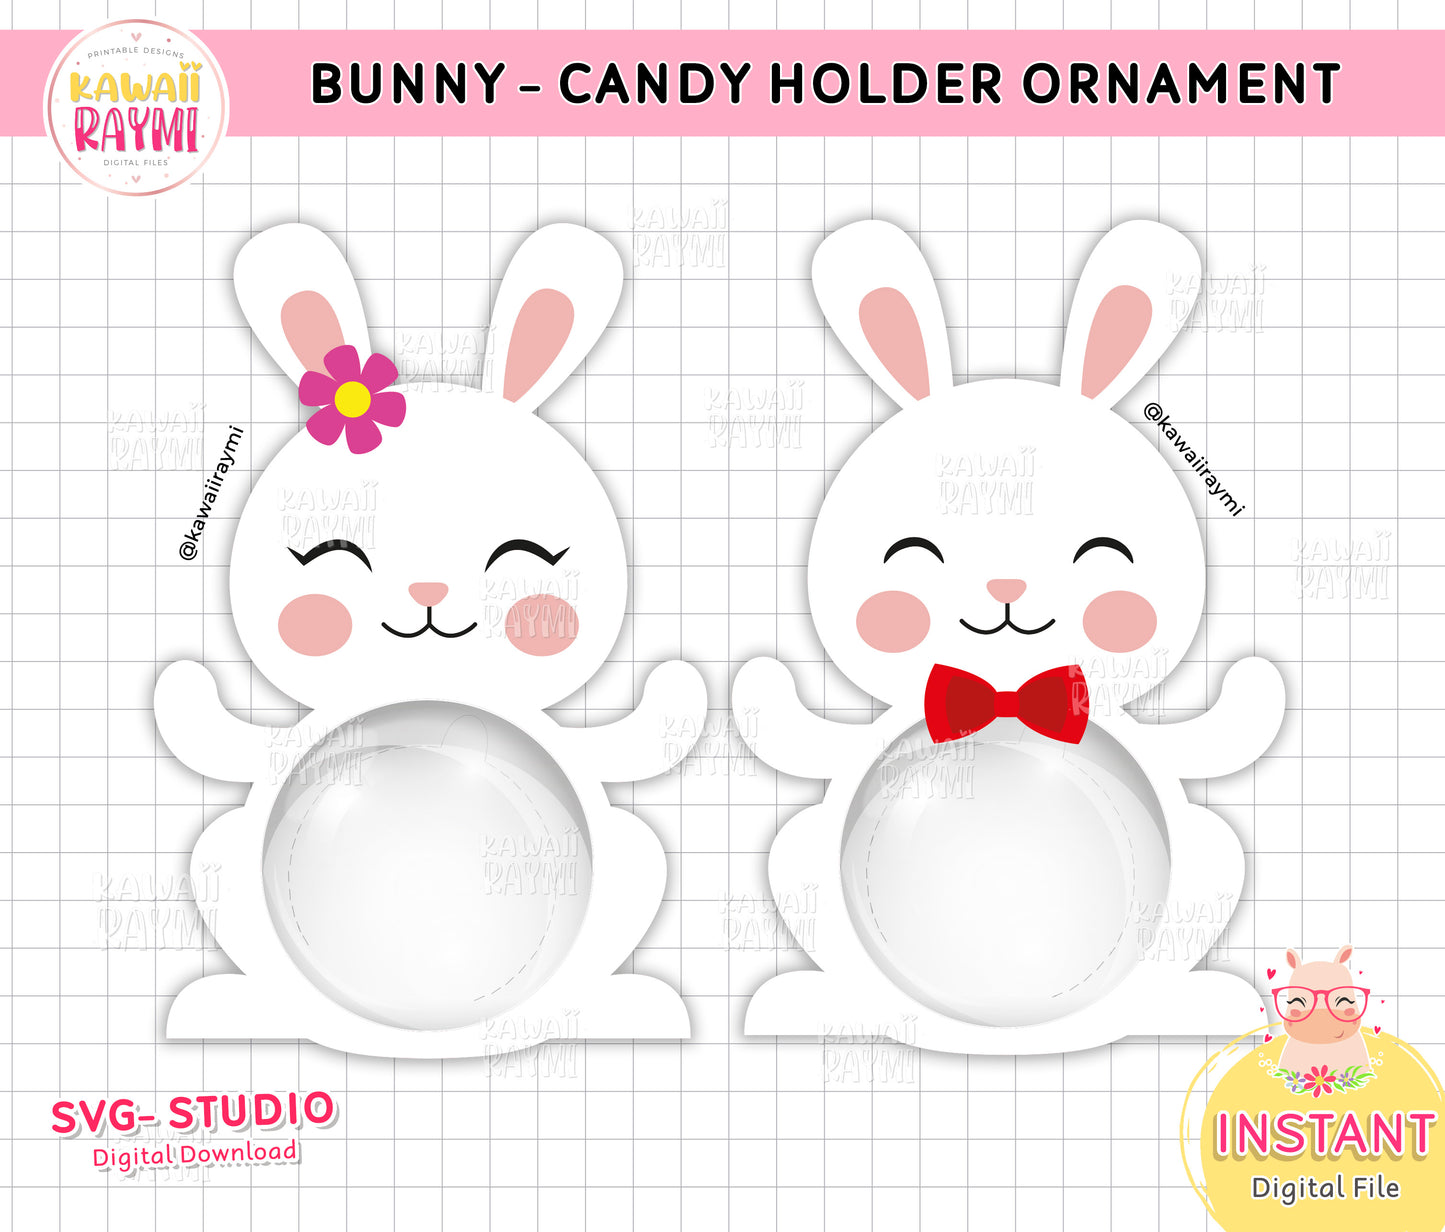 candy holder bunny svg, studio, bunny easter candy holder ornament template, digital file